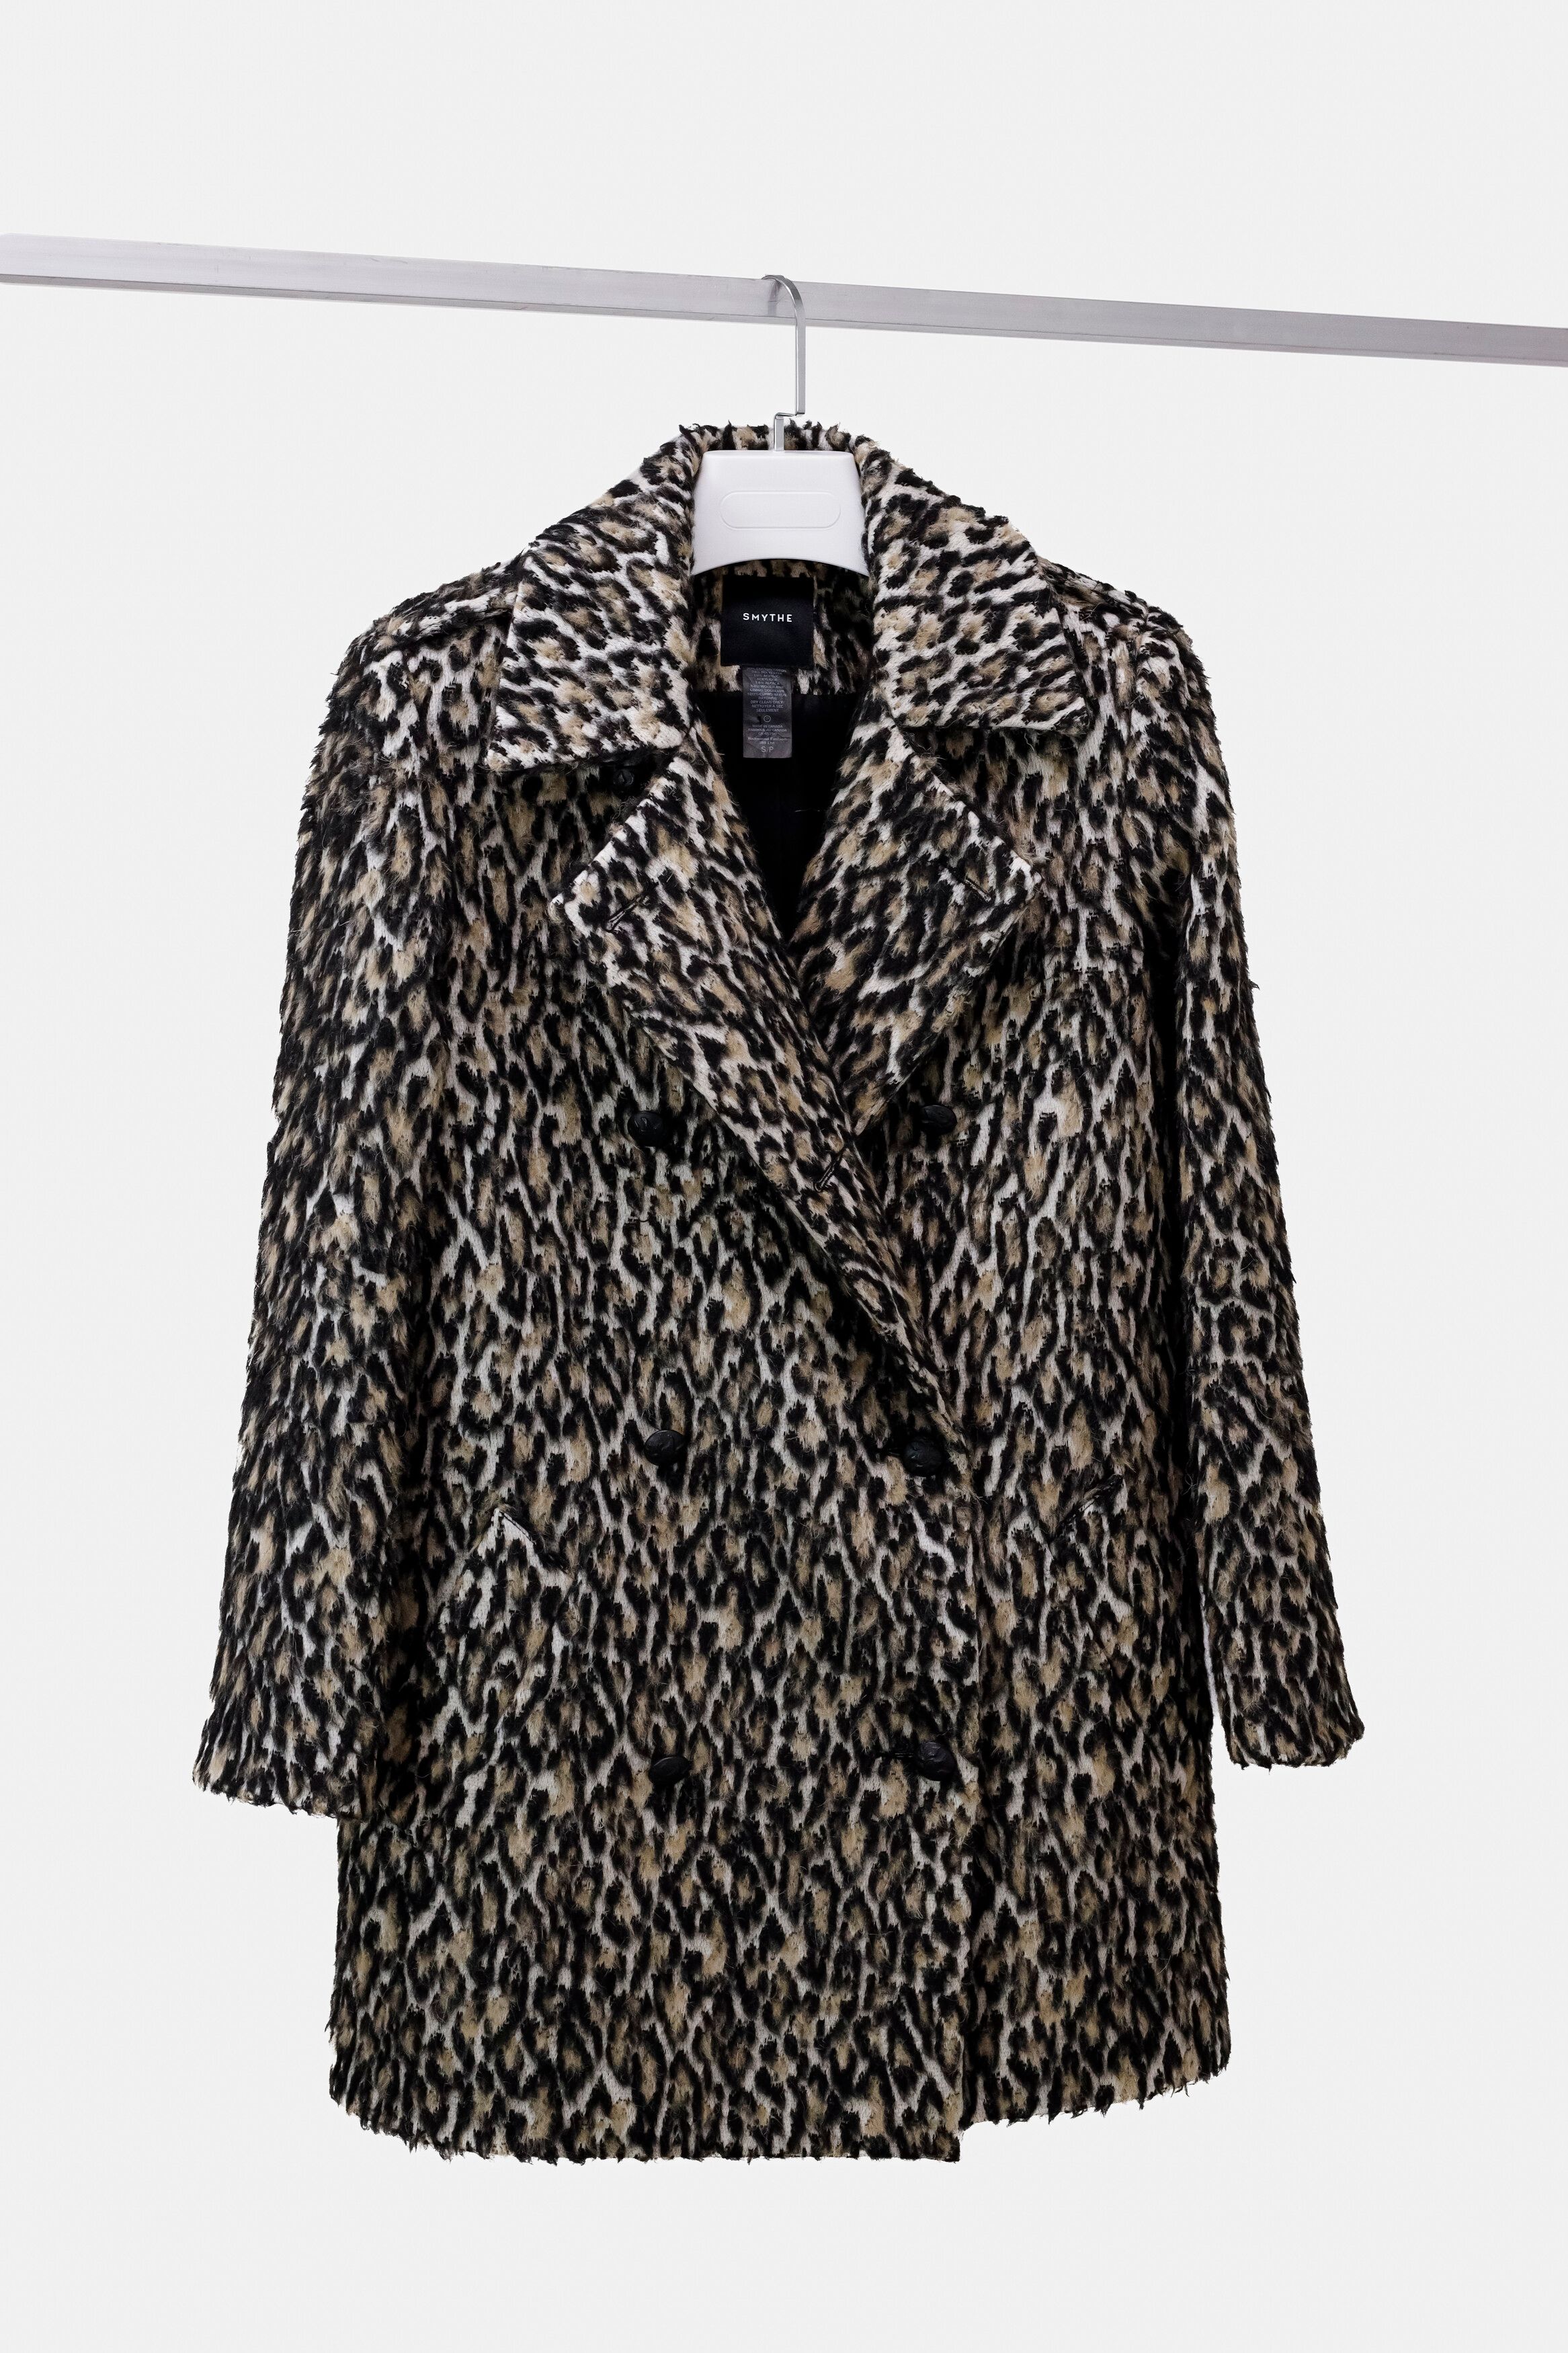 Smythe Smythe Leopard Print Tufted Pea Coat | Grailed